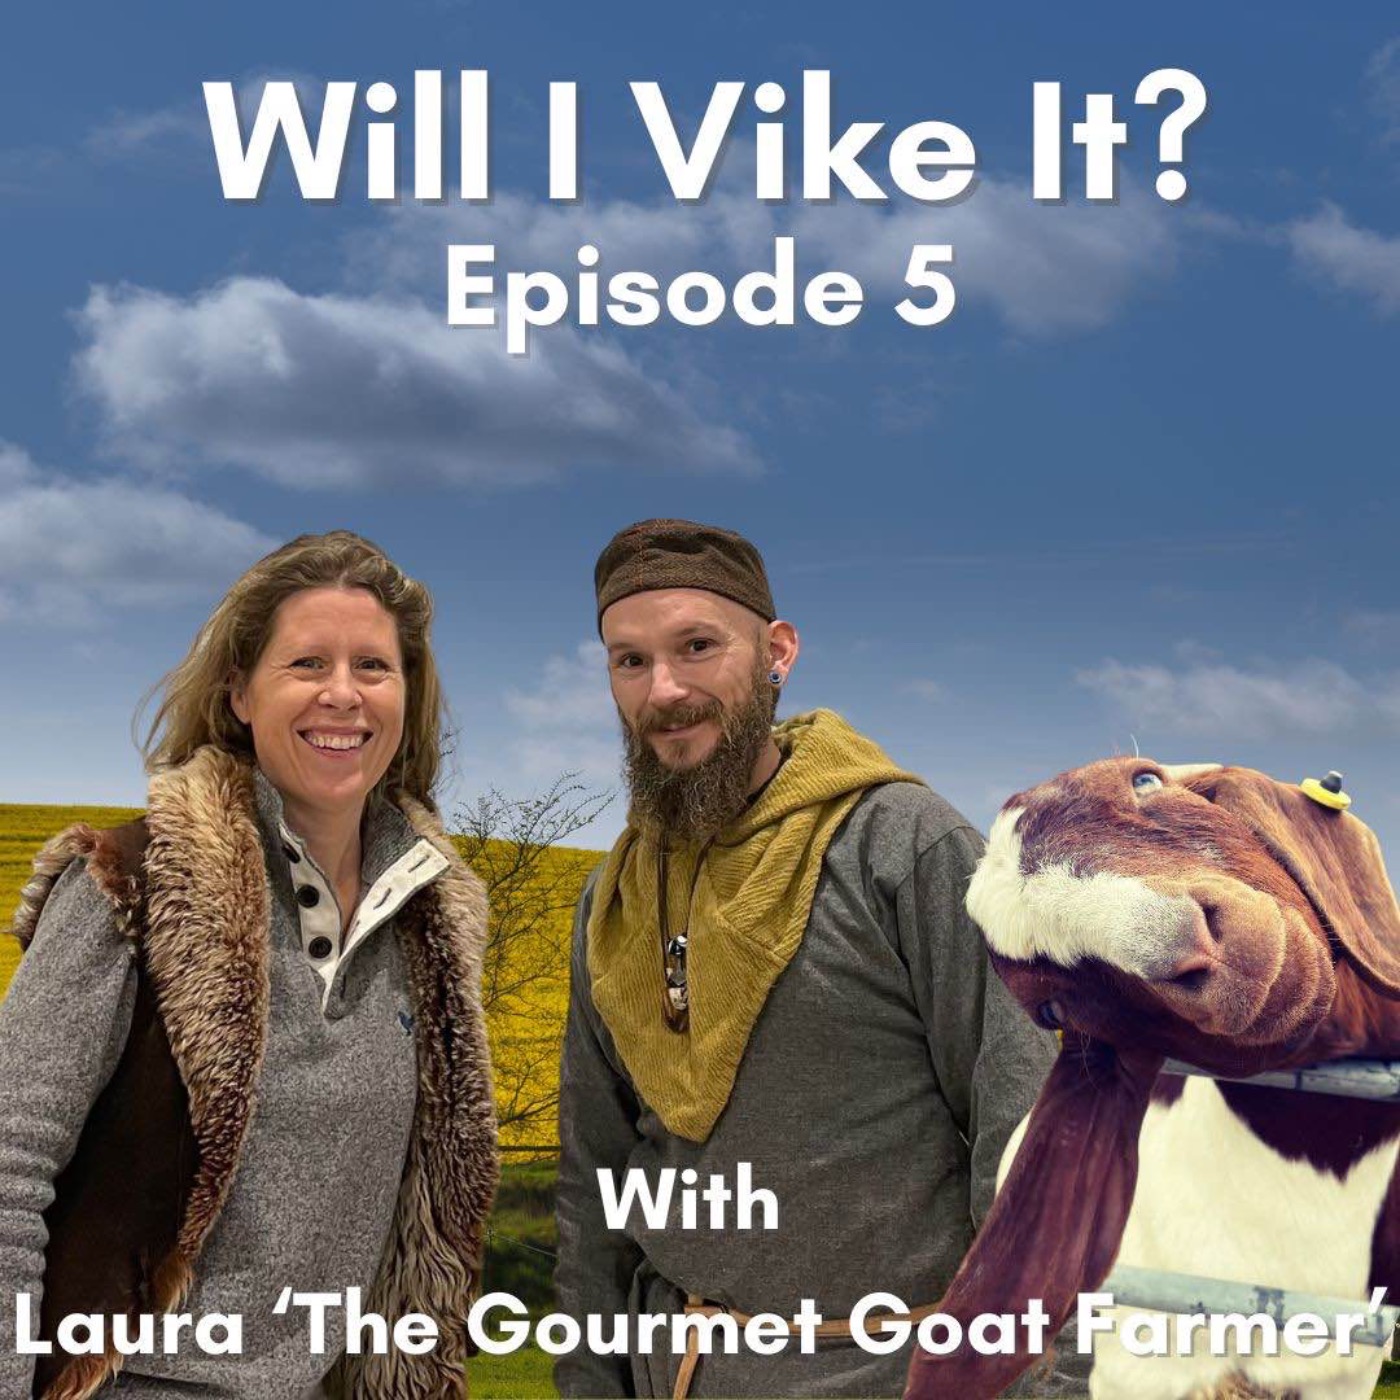 Laura 'The Gourmet Goat Farmer' in Avebury